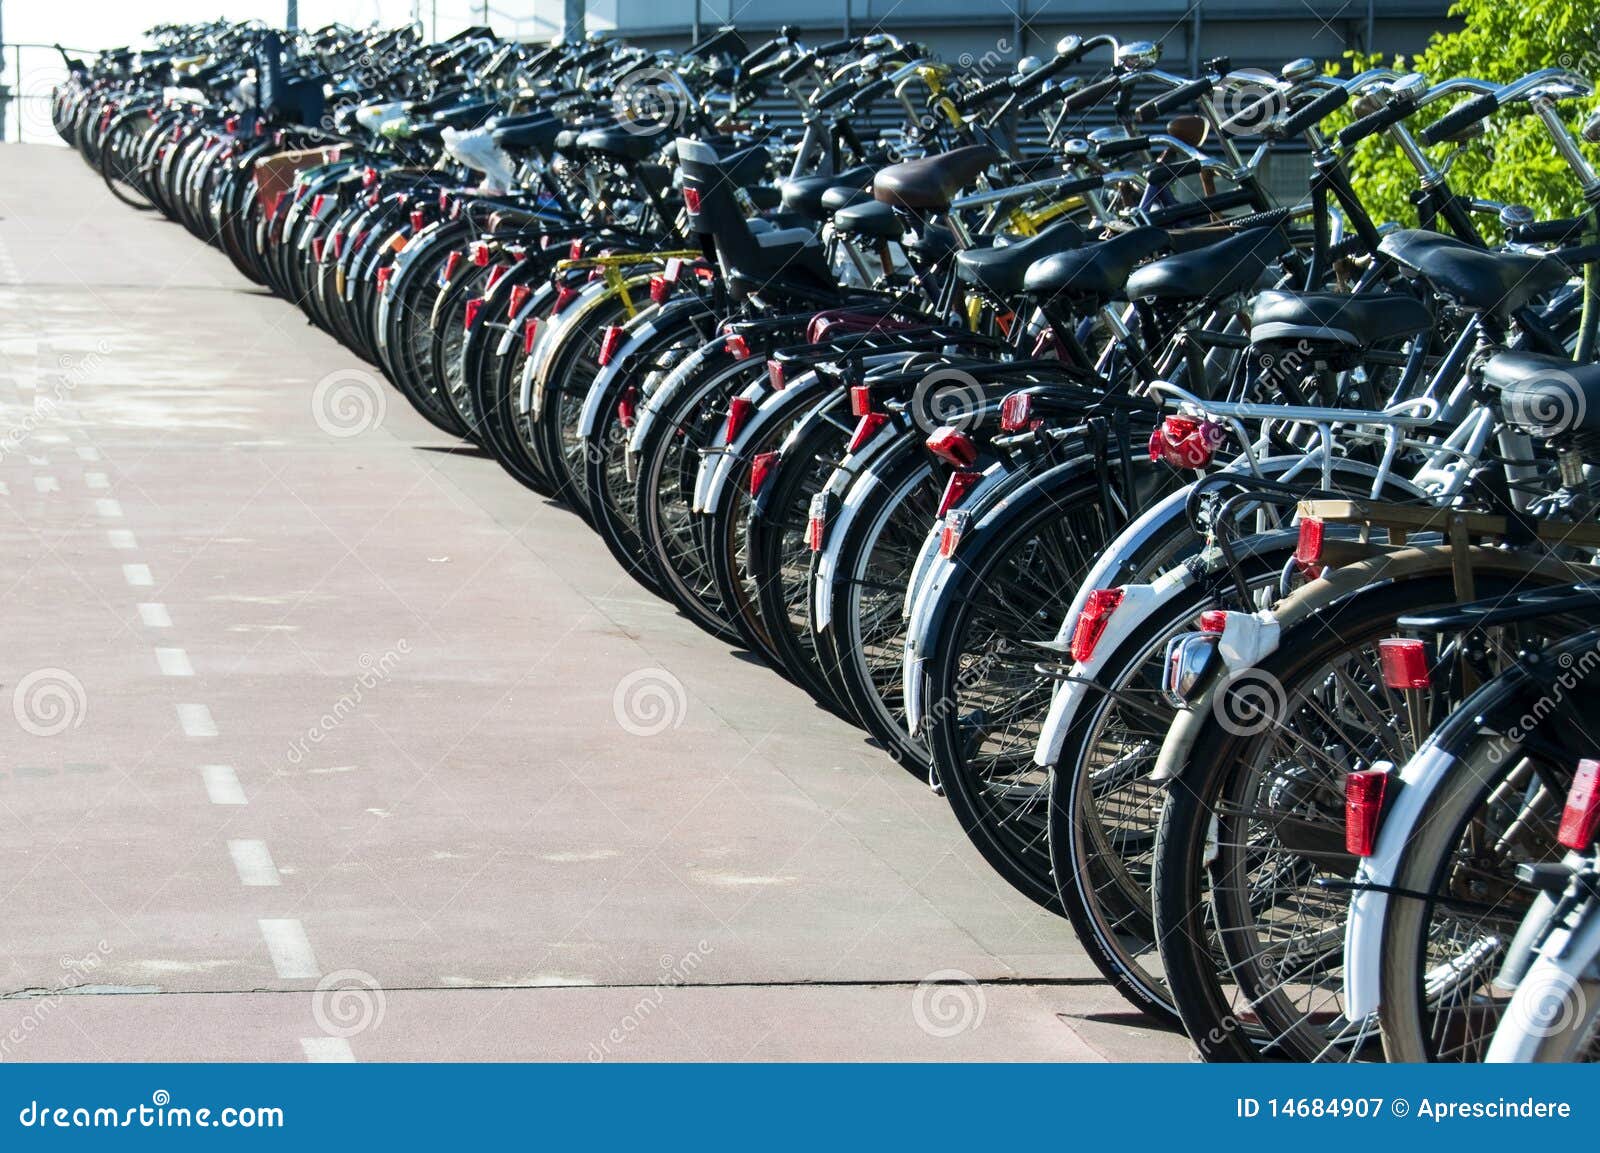 parked bikes in amsterdam